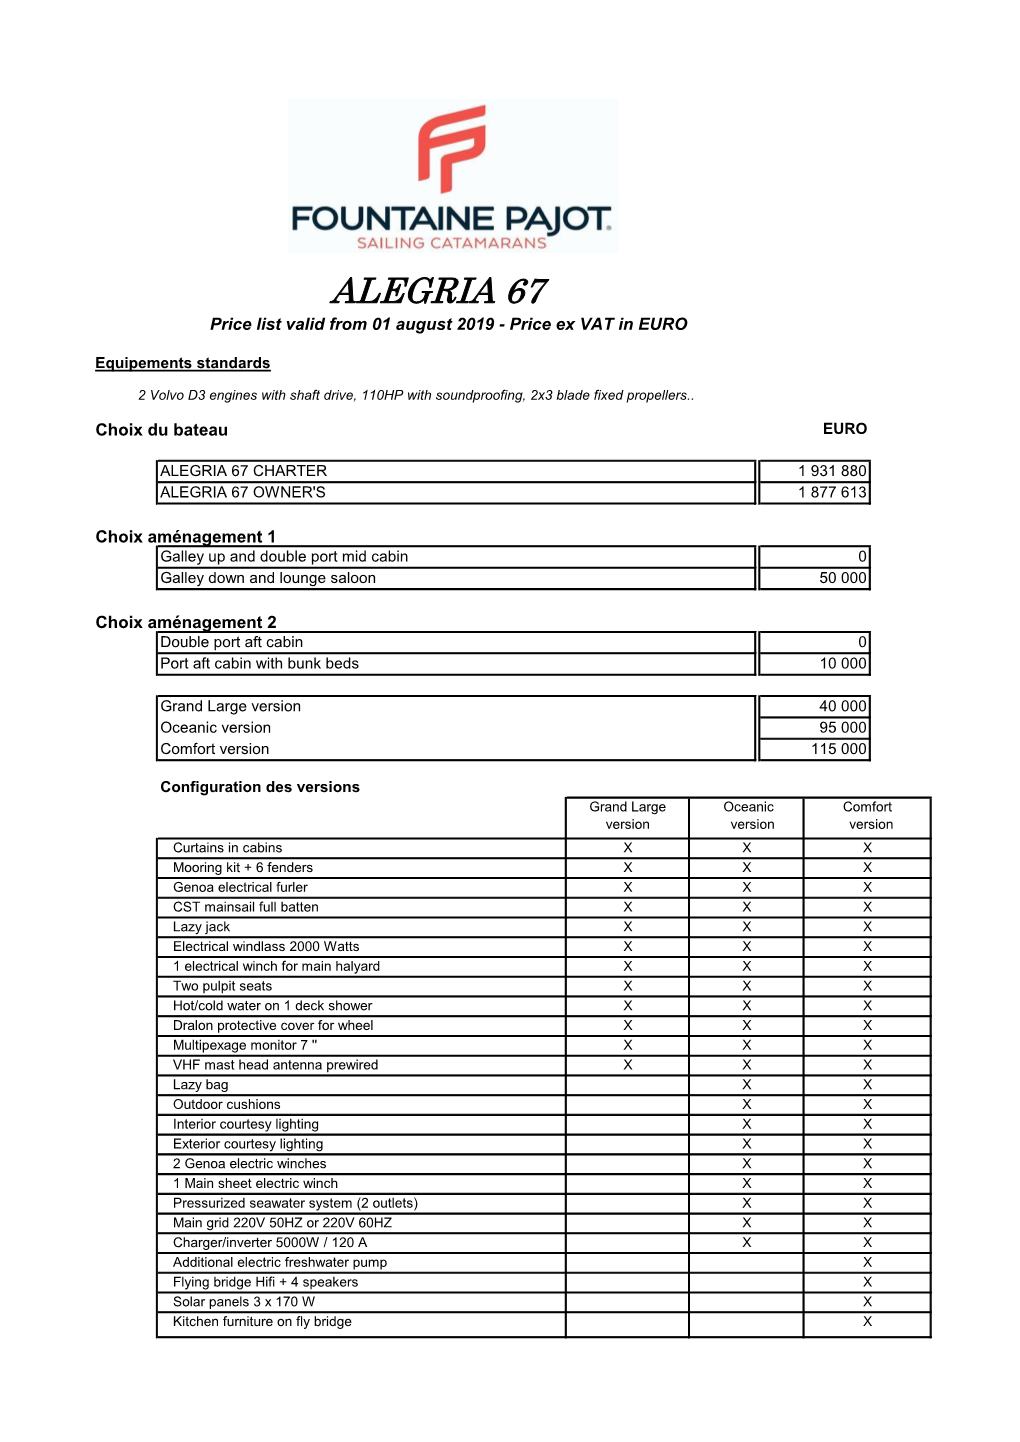 ALEGRIA 67 Price List Valid from 01 August 2019 - Price Ex VAT in EURO